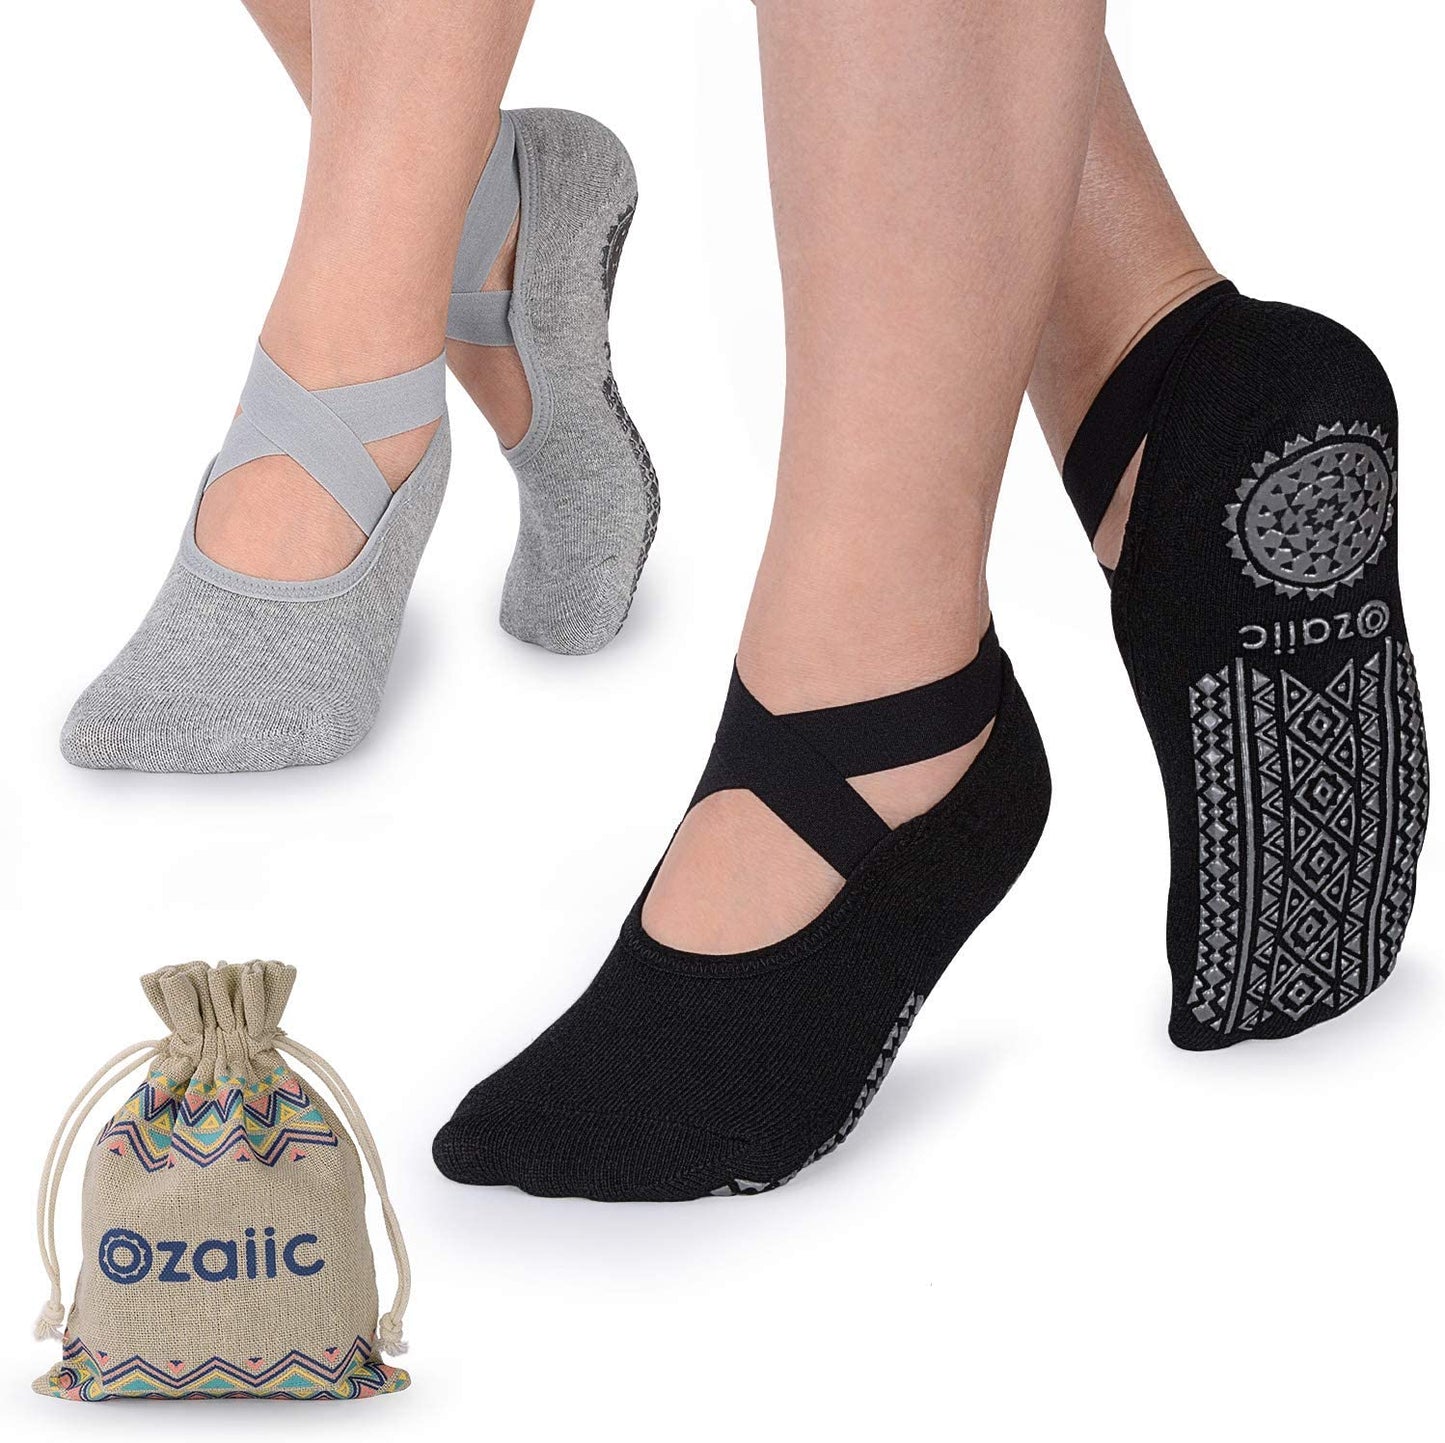 Yoga Socks for Women Non-Slip Grips & Straps, Ideal for Pilates, Pure Barre, Ballet, Dance, Barefoot Workout